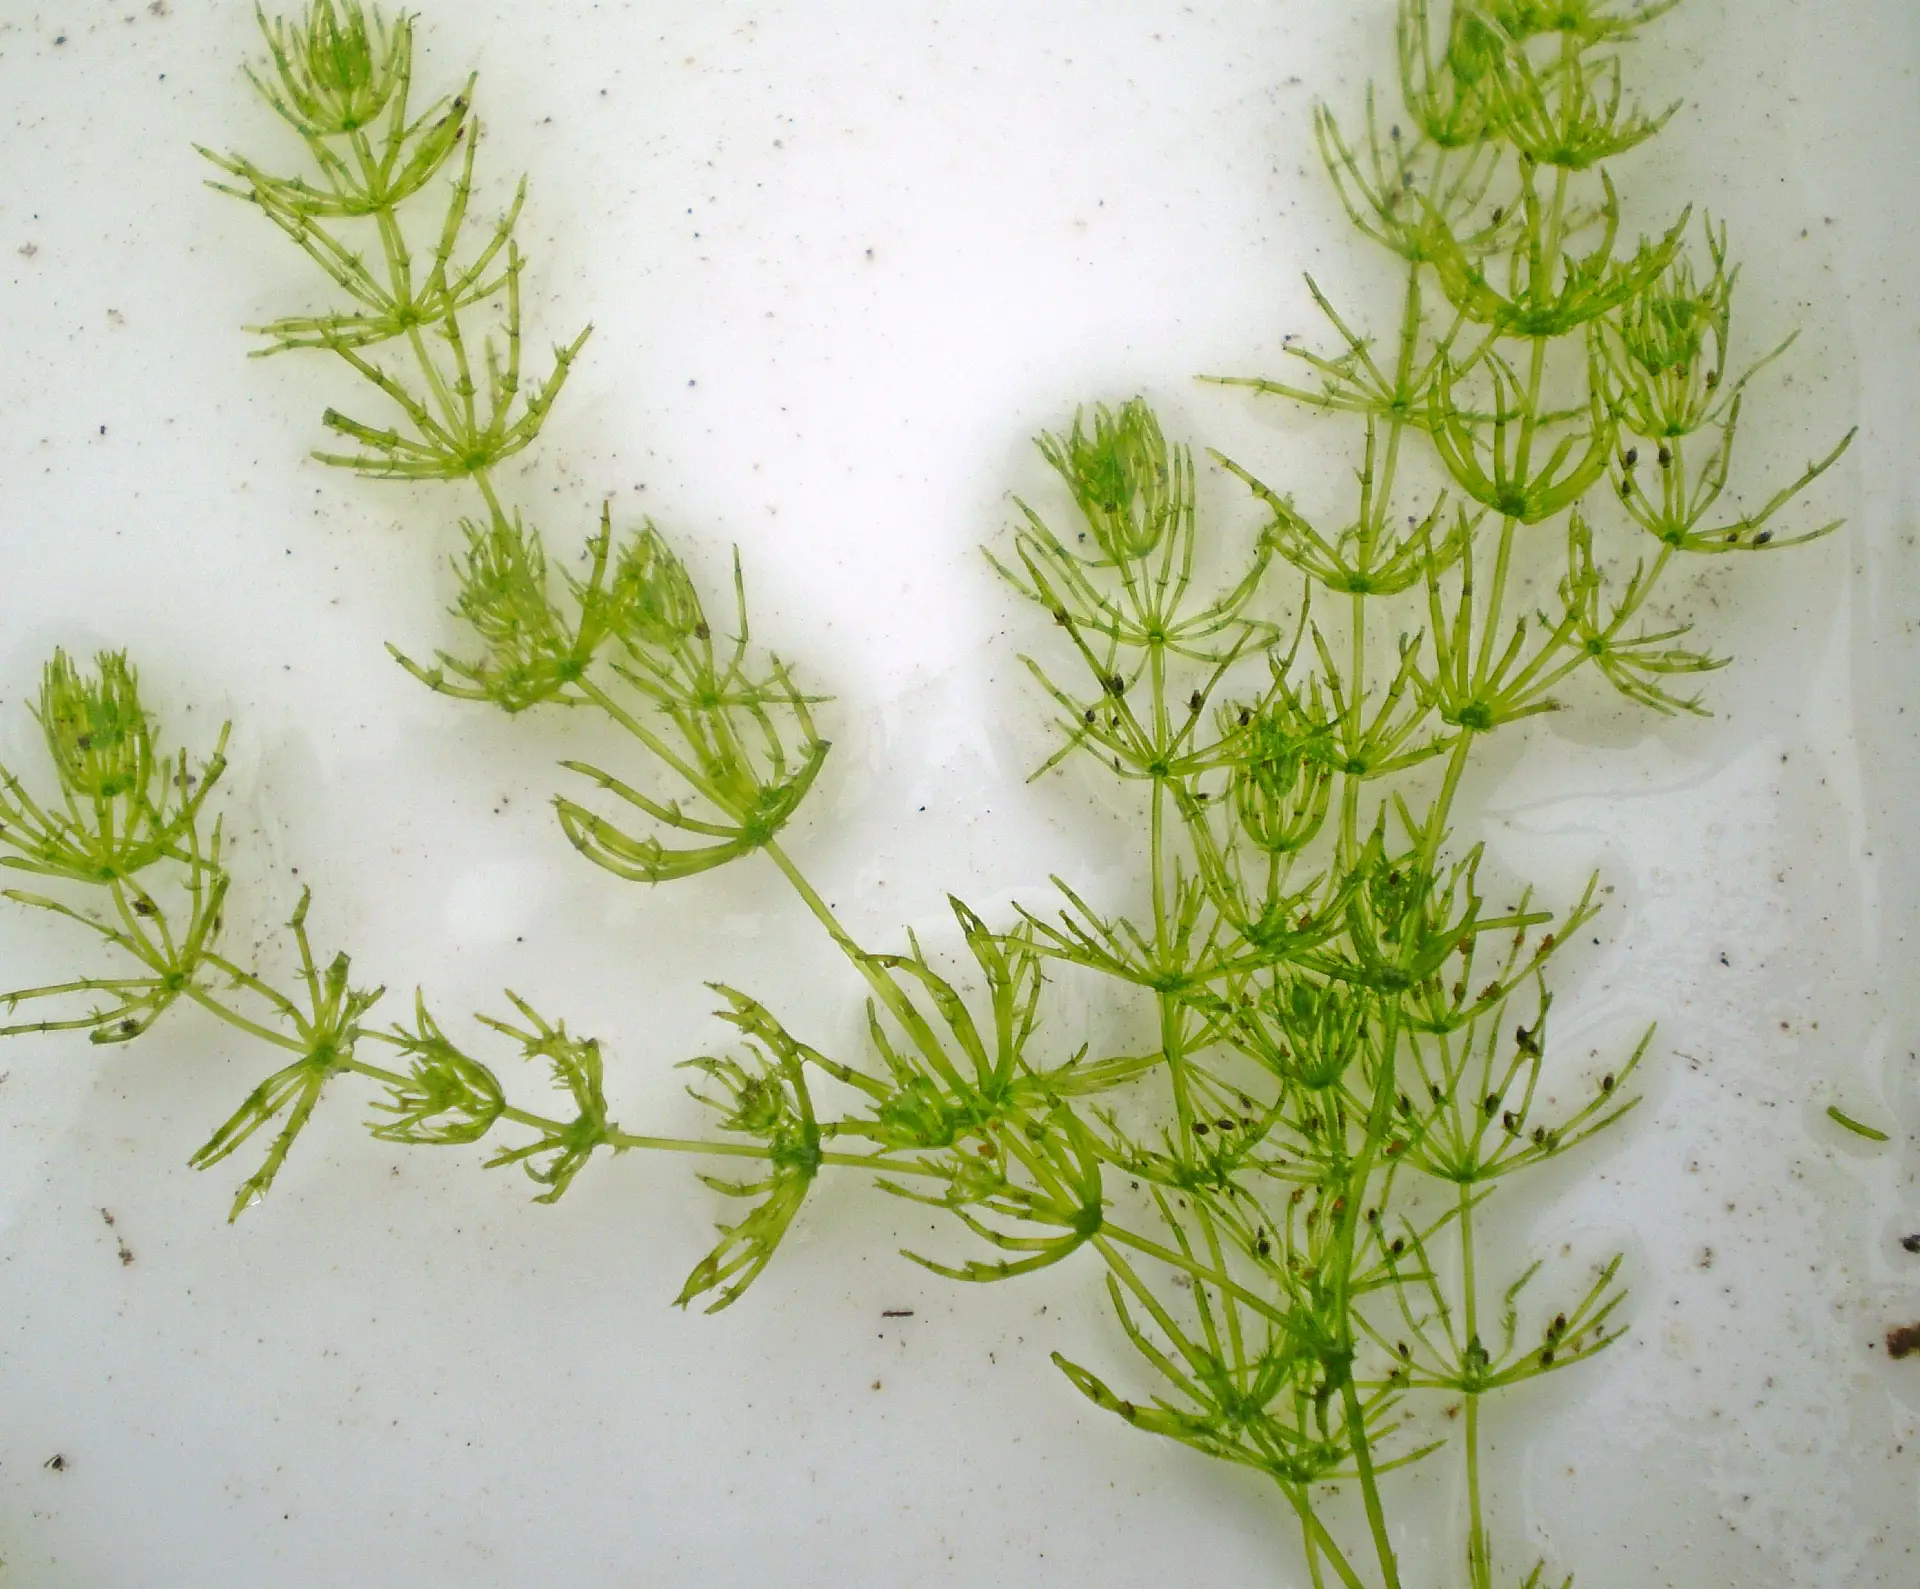 CHARA (STONE-WORT)​ Algae